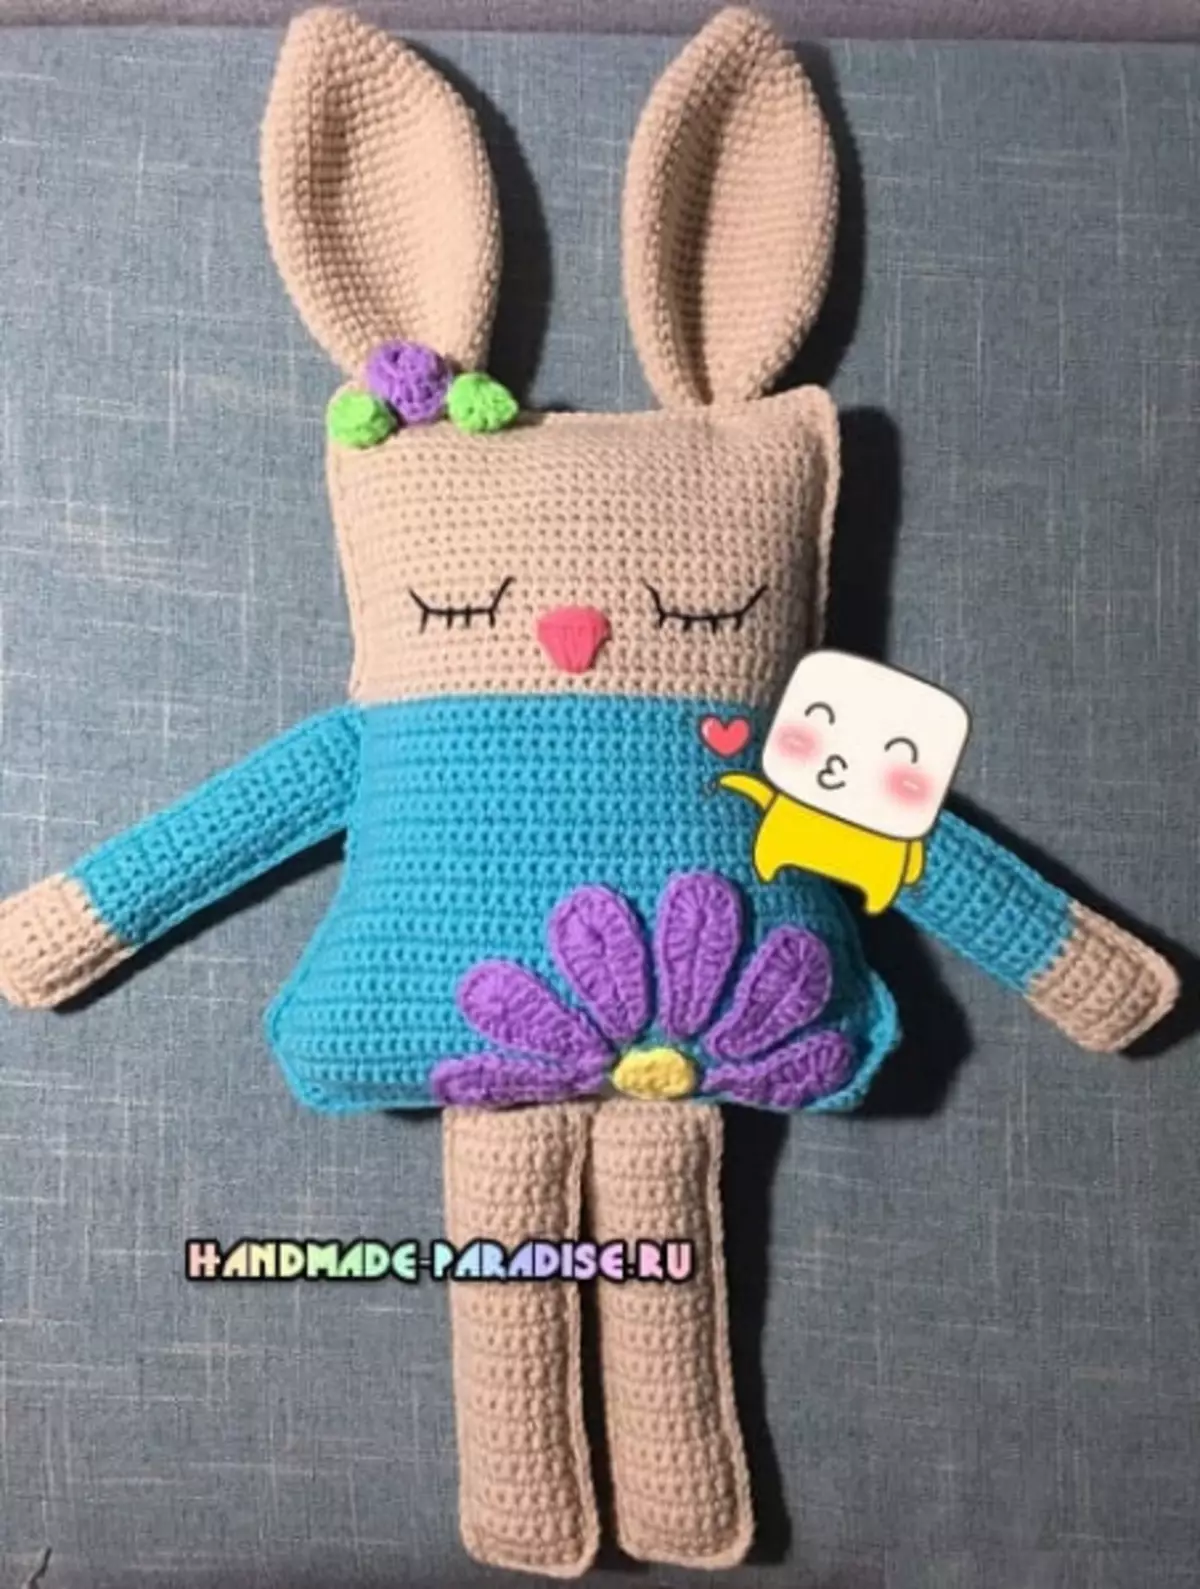 Kuneho-split. Knit crocheted toy pillow.